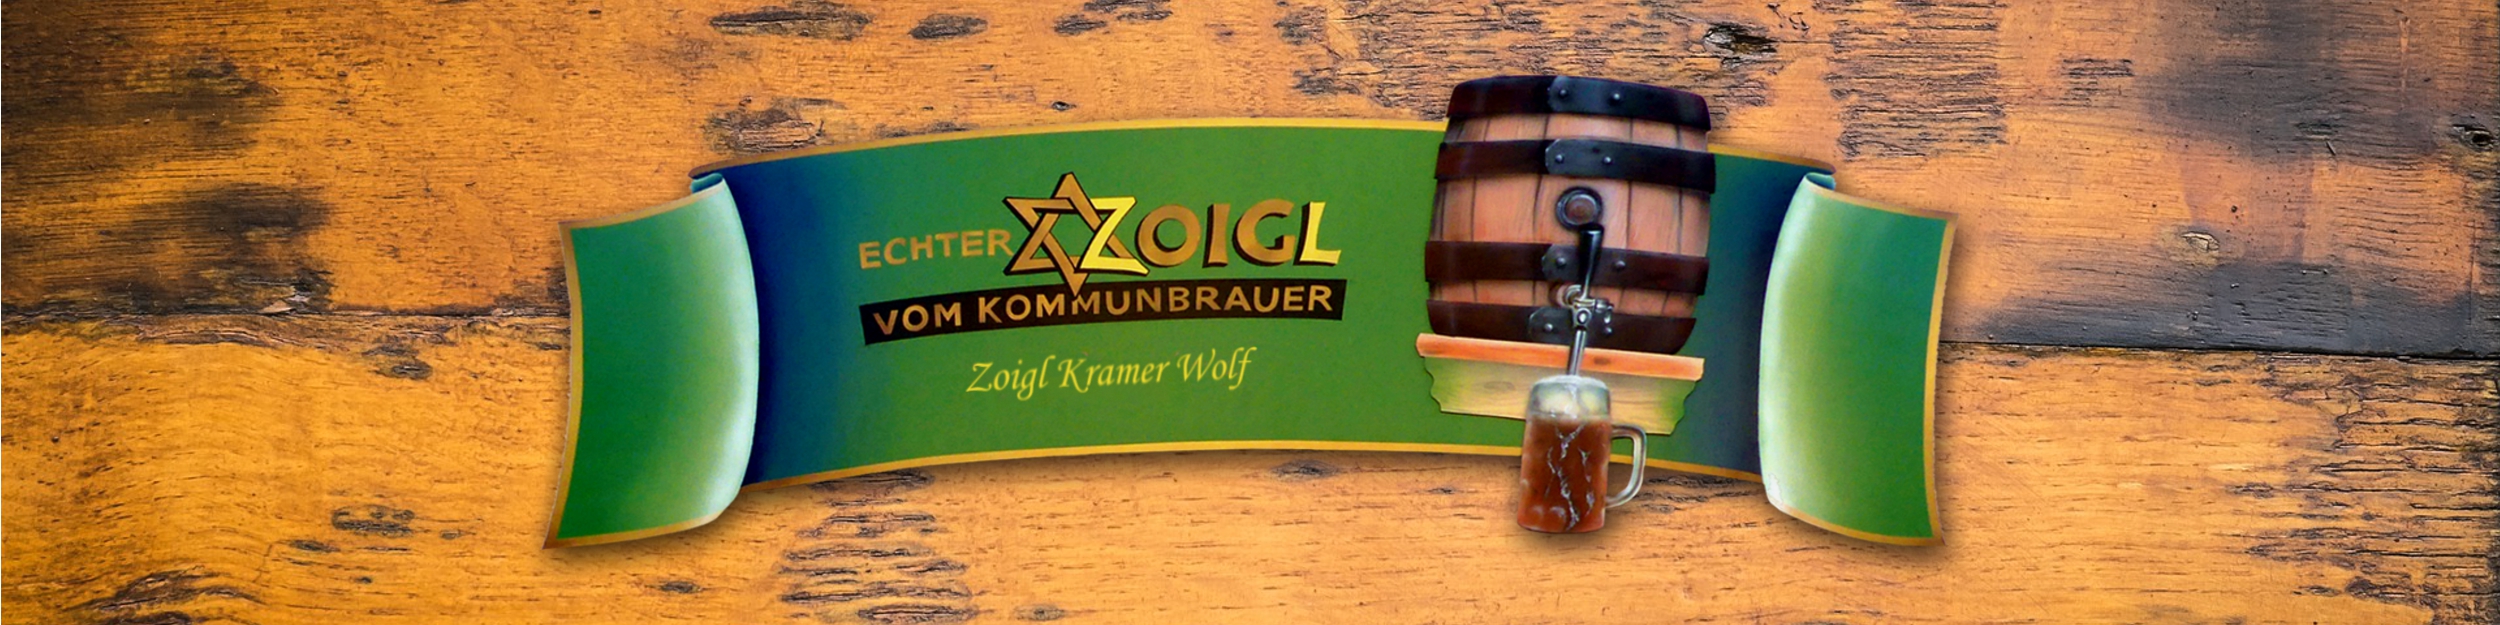 Zoigl Kramer Wolf